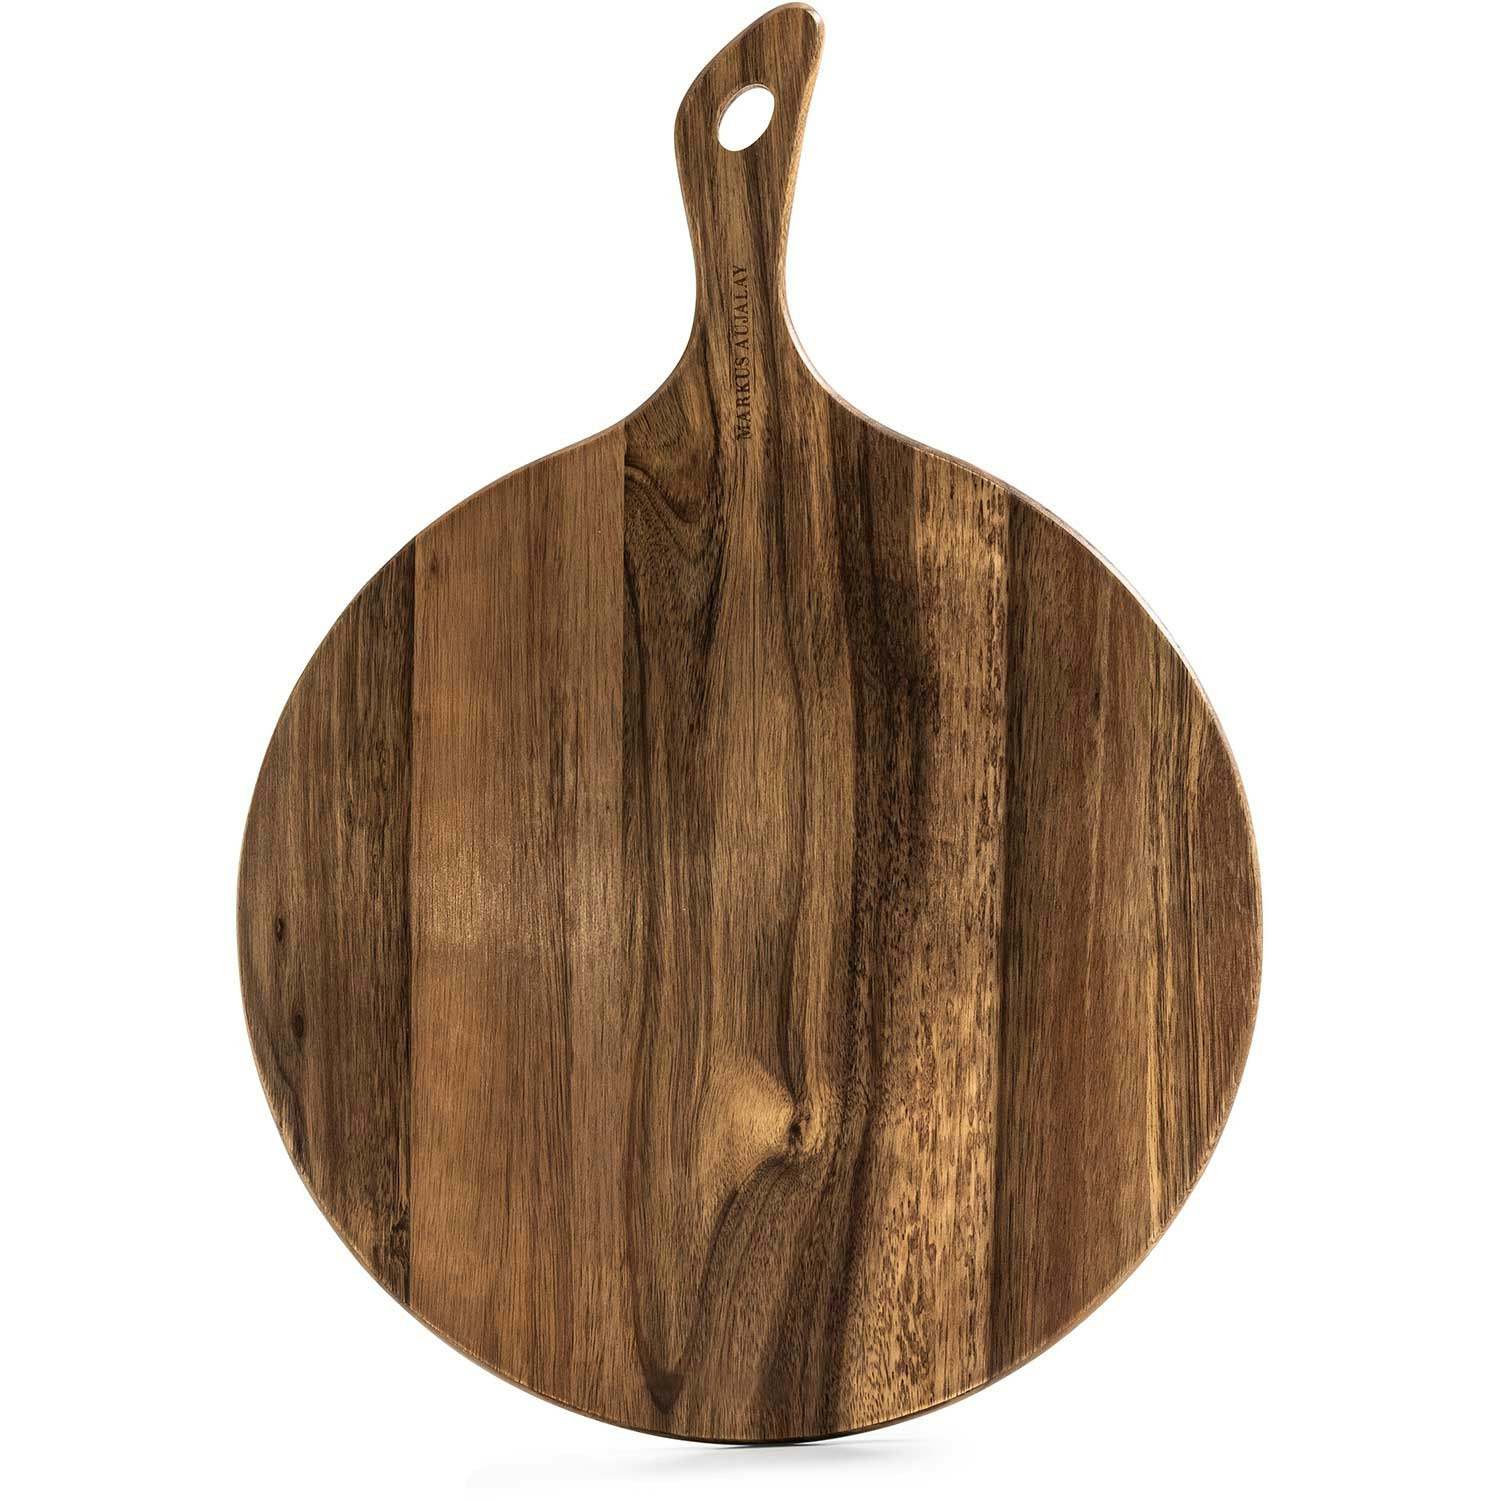 https://royaldesign.com/image/2/markus-aujalay-markus-cheese-board-with-cutlery-48x35x15-cm-acacia-wood-0